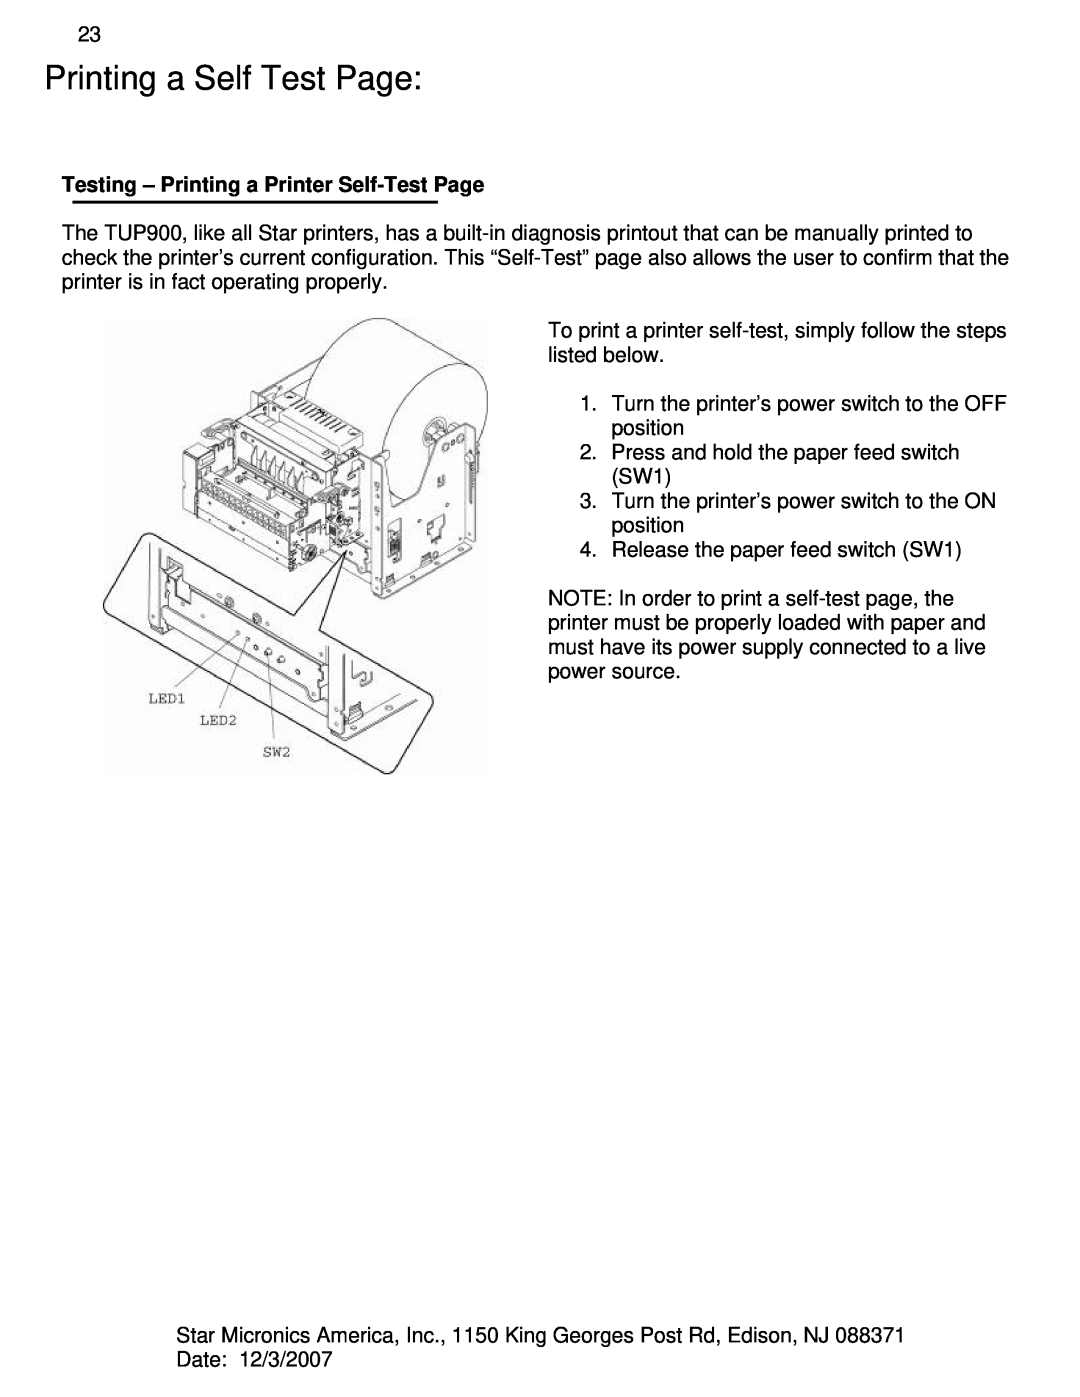 Star Micronics TUP992, TUP942 manual Printing a Self Test Page, Testing - Printing a Printer Self-Test Page 